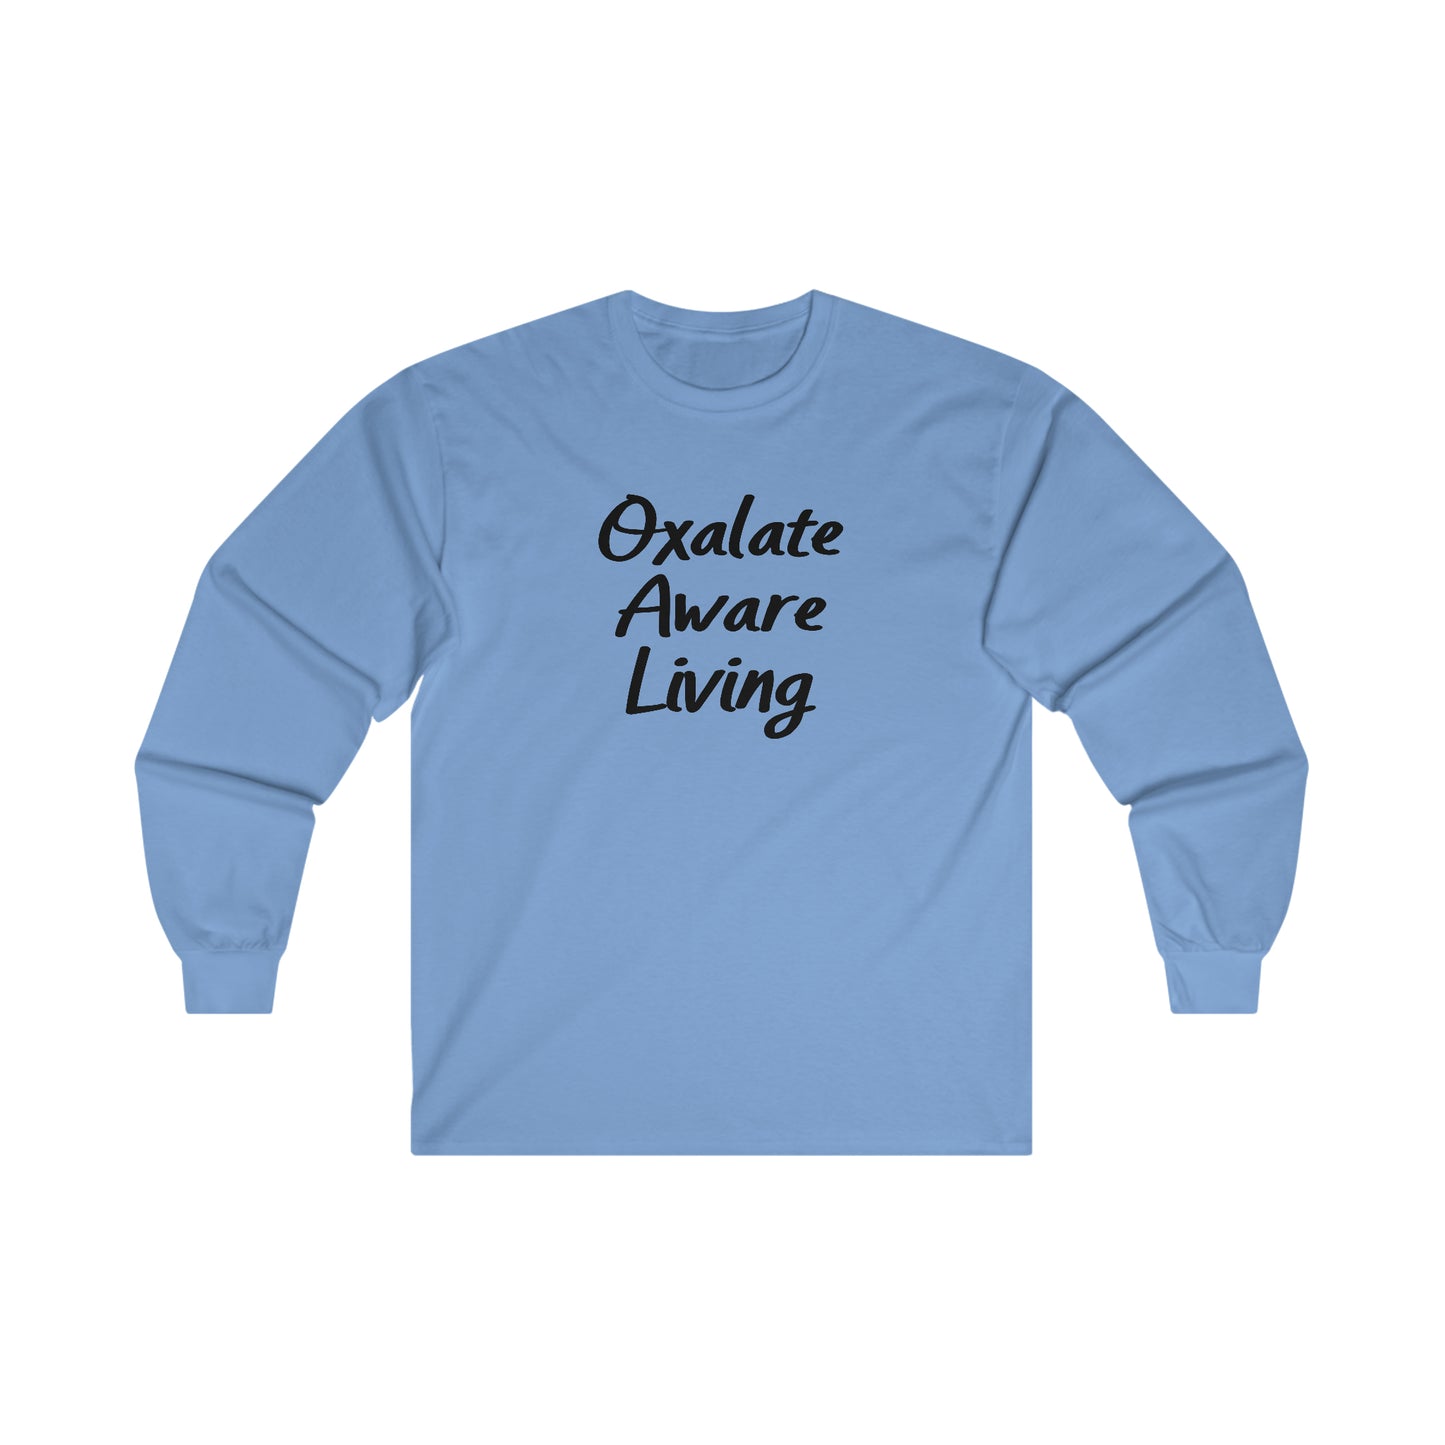 Oxalate Aware Living Kidney Disease Long Sleeve Cotton T Shirt